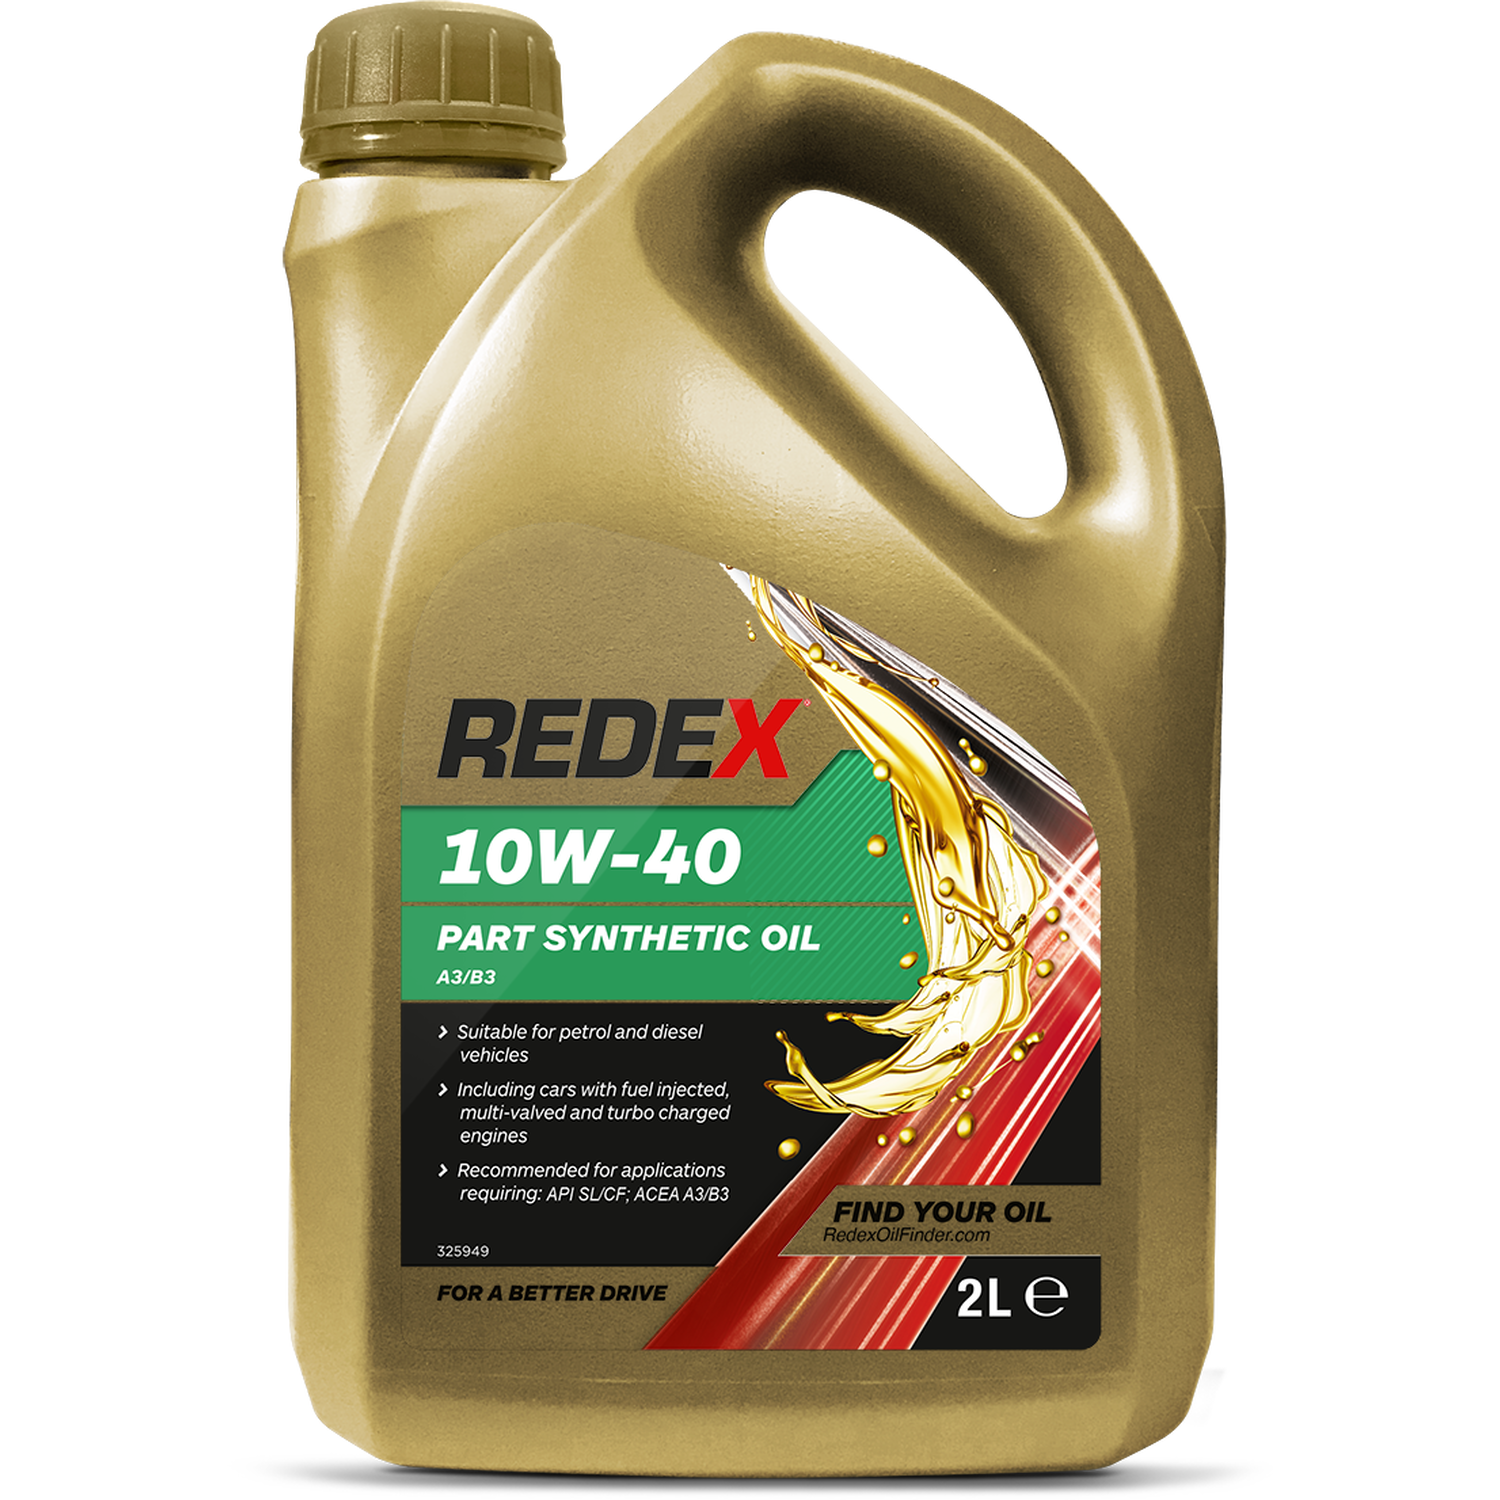 Redex 10W40 Part Synthetic Oil 2L Image